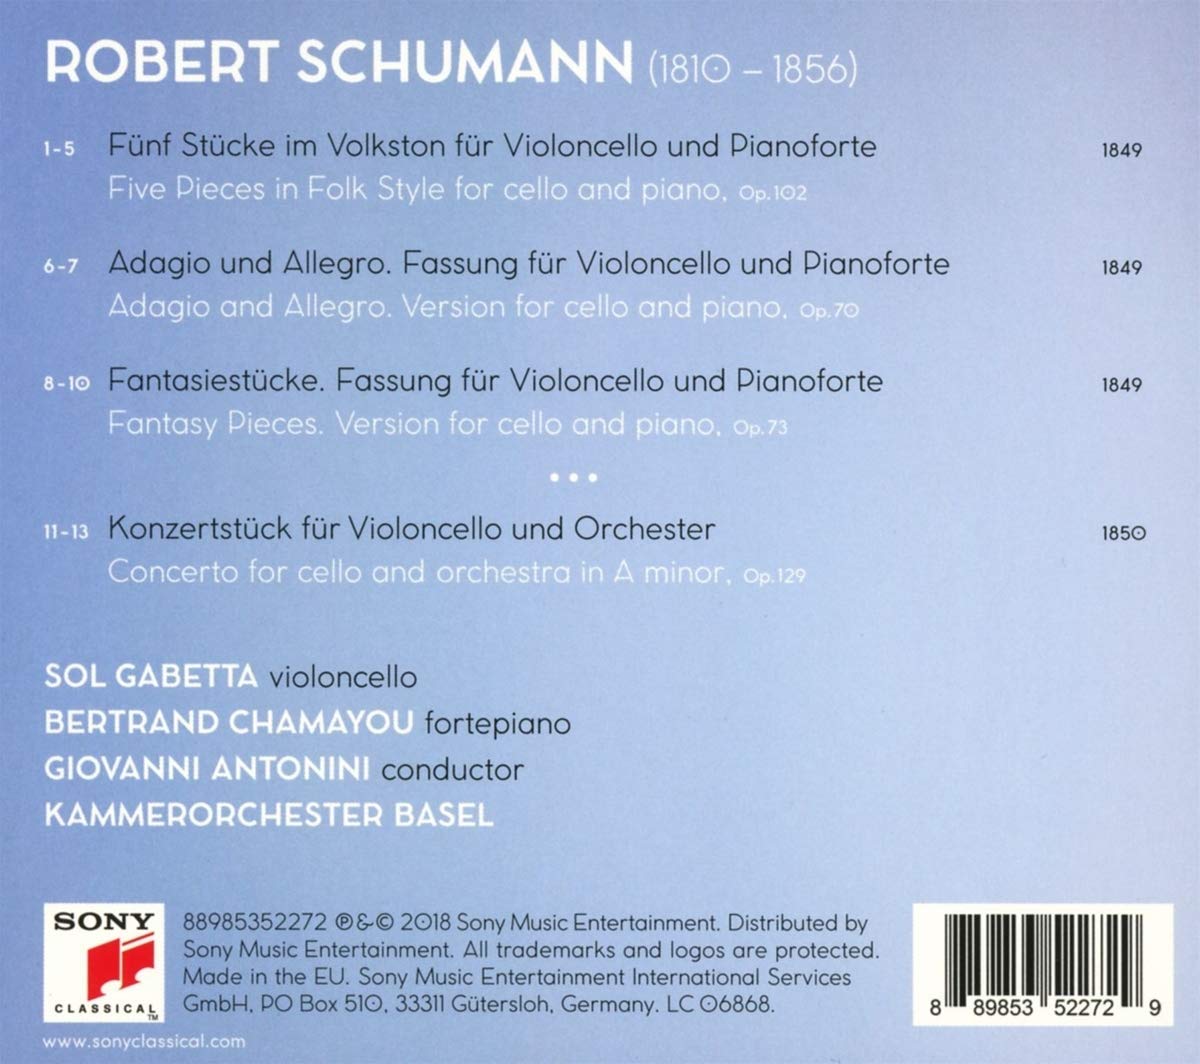 Sol Gabetta 슈만: 첼로 협주곡, 실내악 작품집 (Schumann: Cello Concerto, Chamber Music)